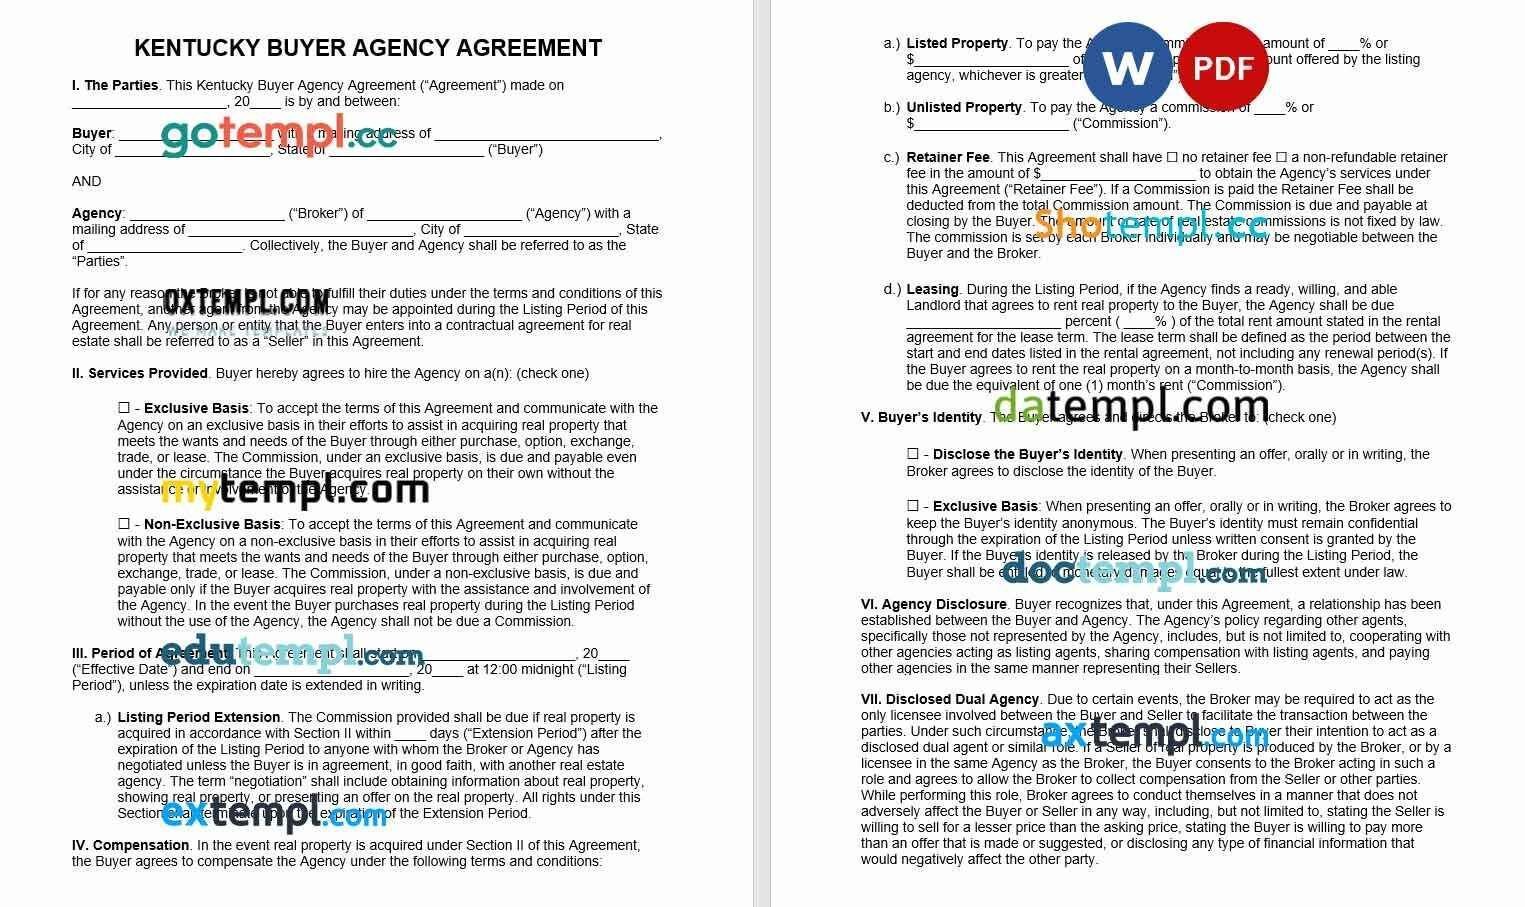 Kentucky Buyer Agency Agreement Word example, completely editable